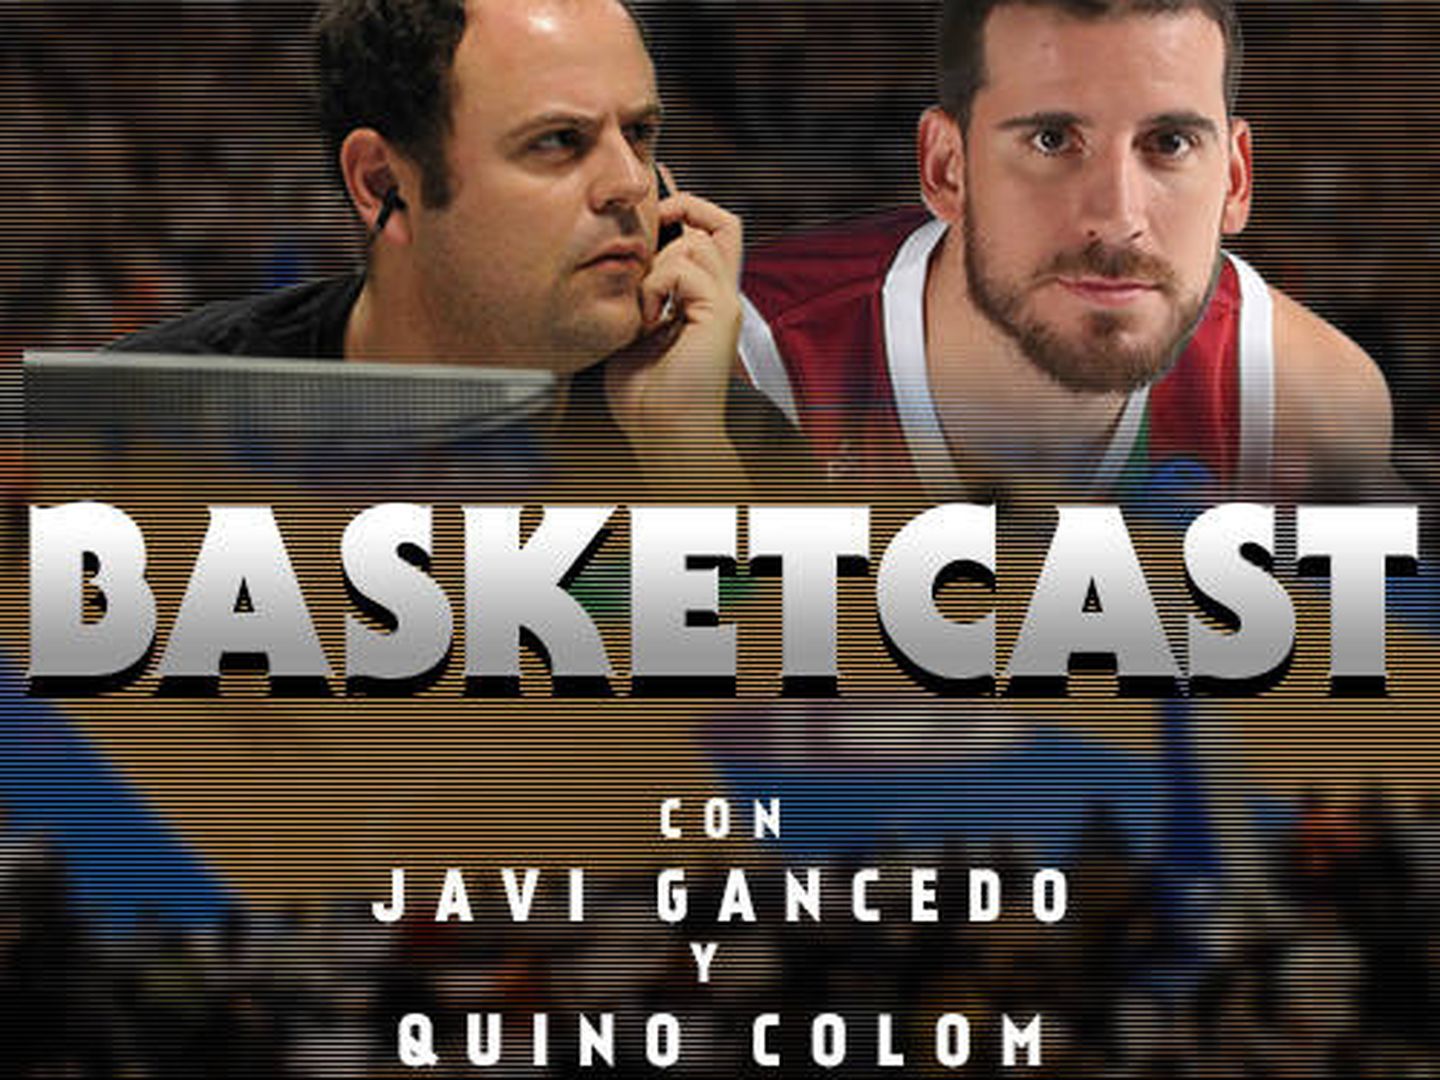 Basketcast, el podcast de Javier Gancedo y Quino Colom.